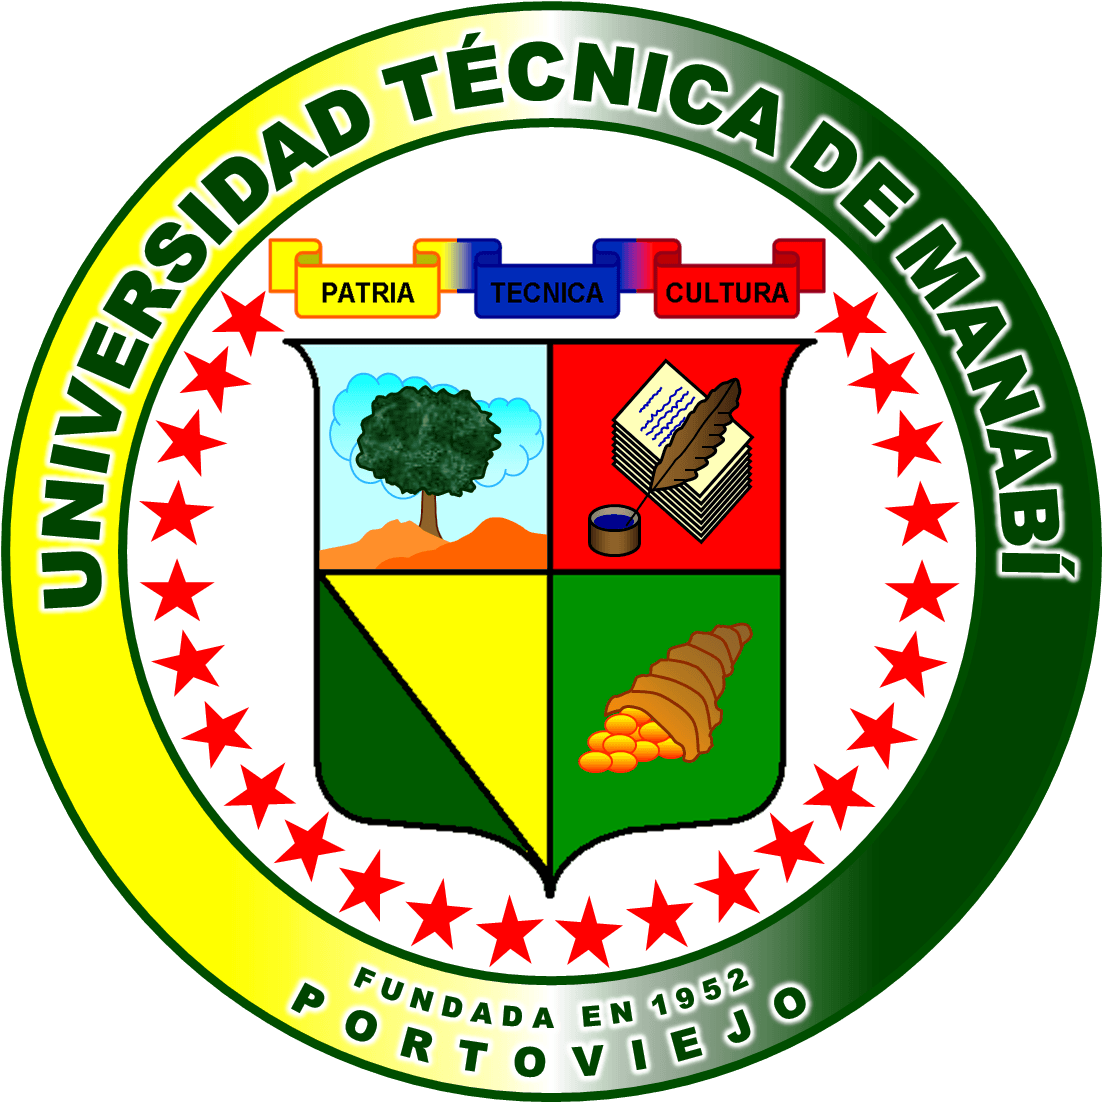 UTM Logo - Logo utm png.png